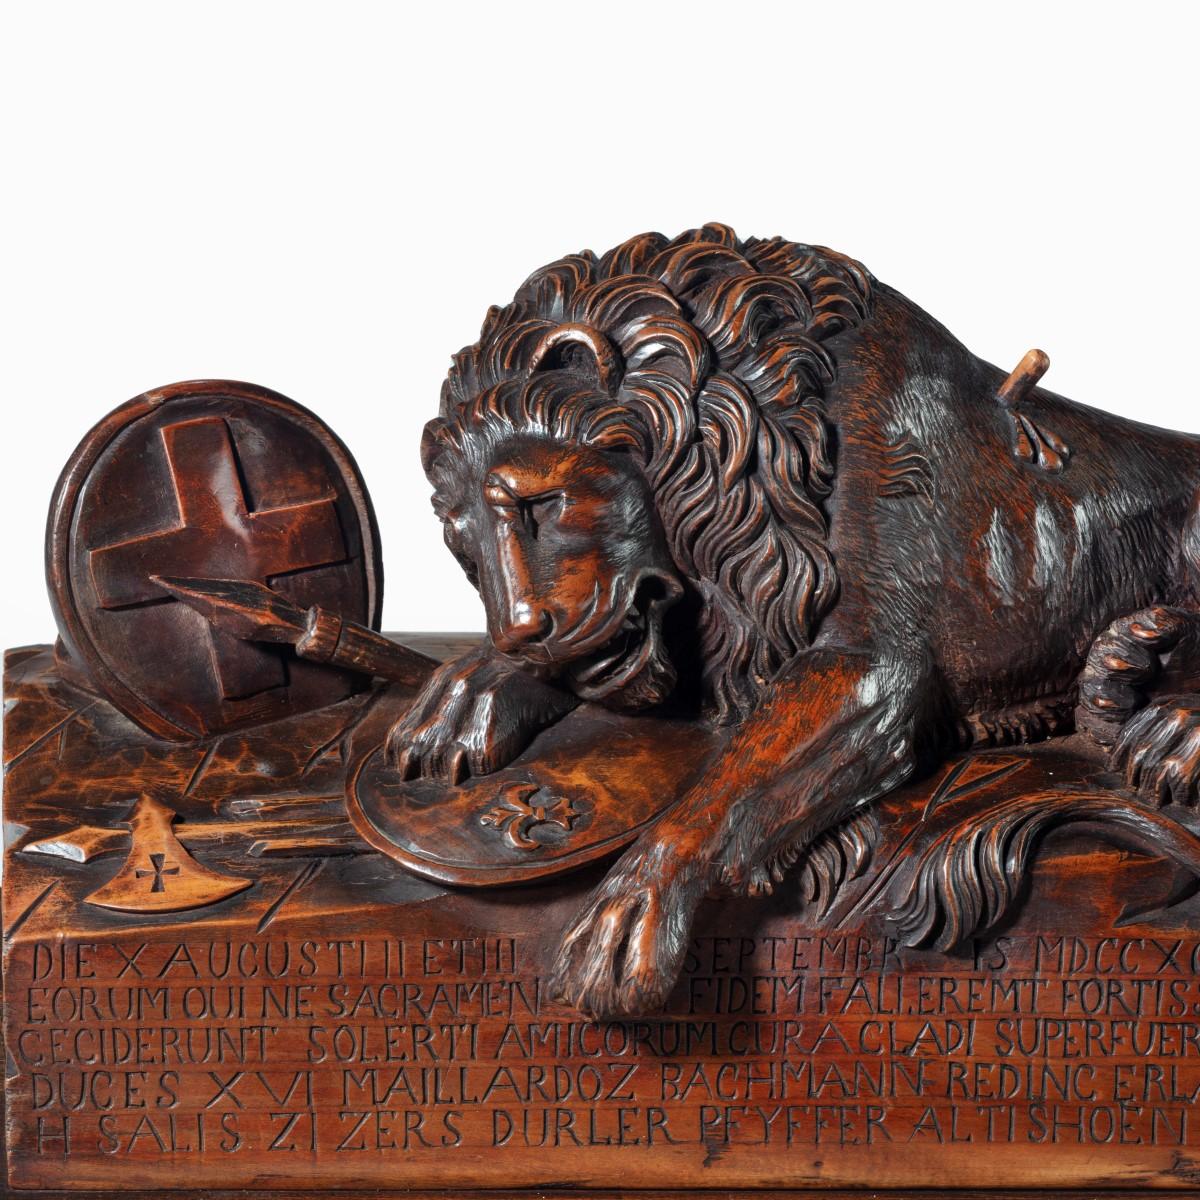 Burmese Burl-wood Carving of Attacking Lion